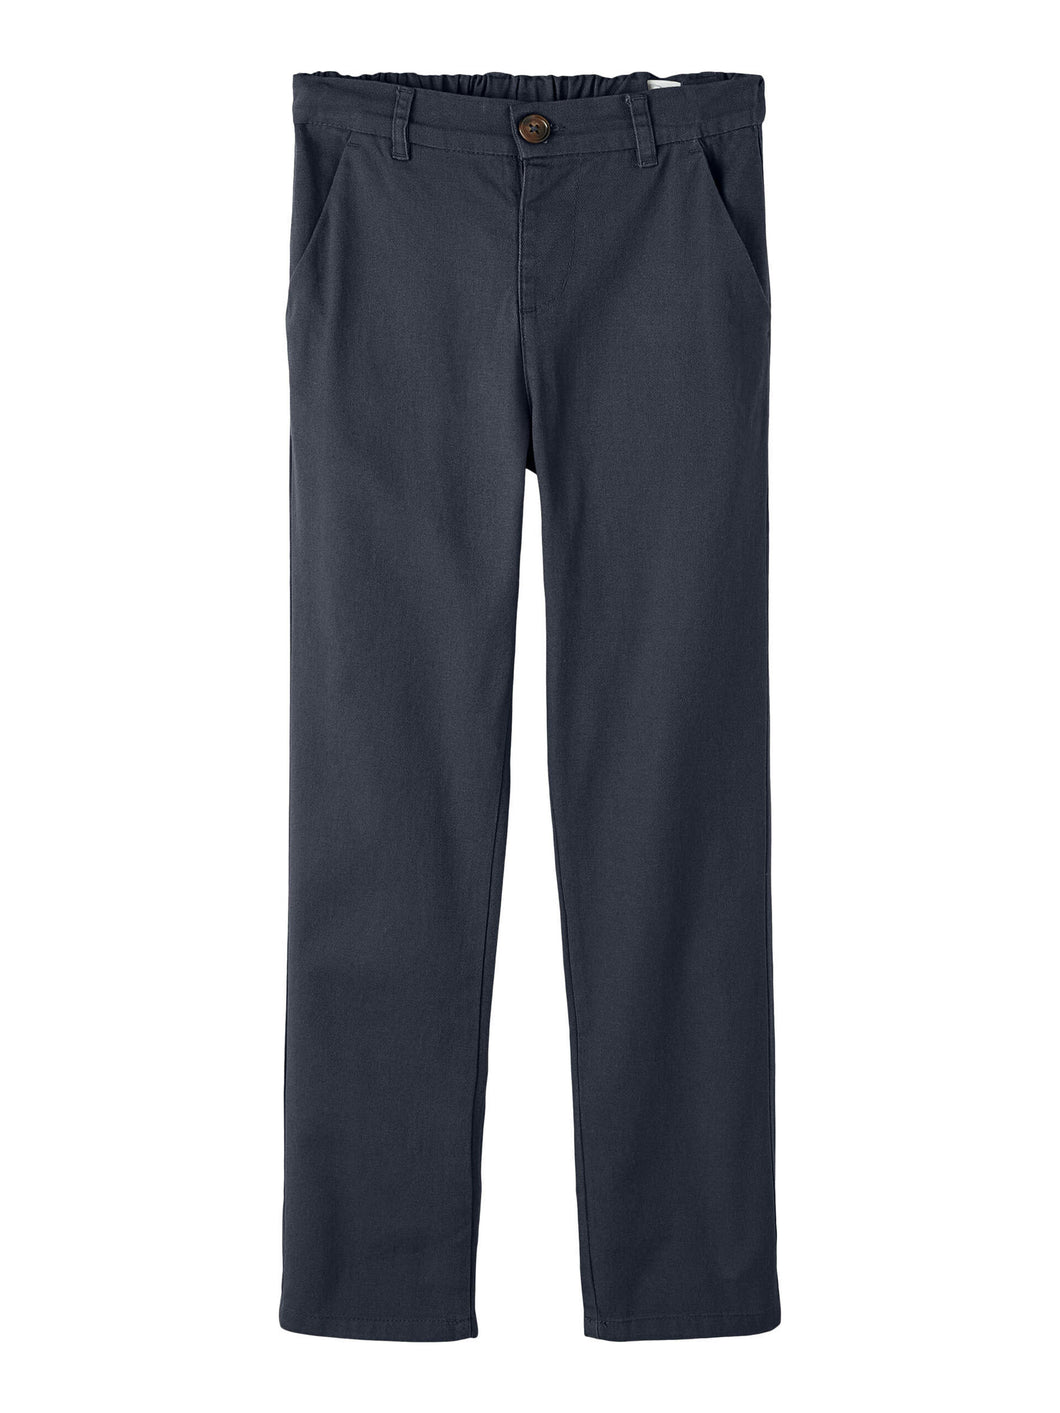 Pants Regular Fit, 2 colors